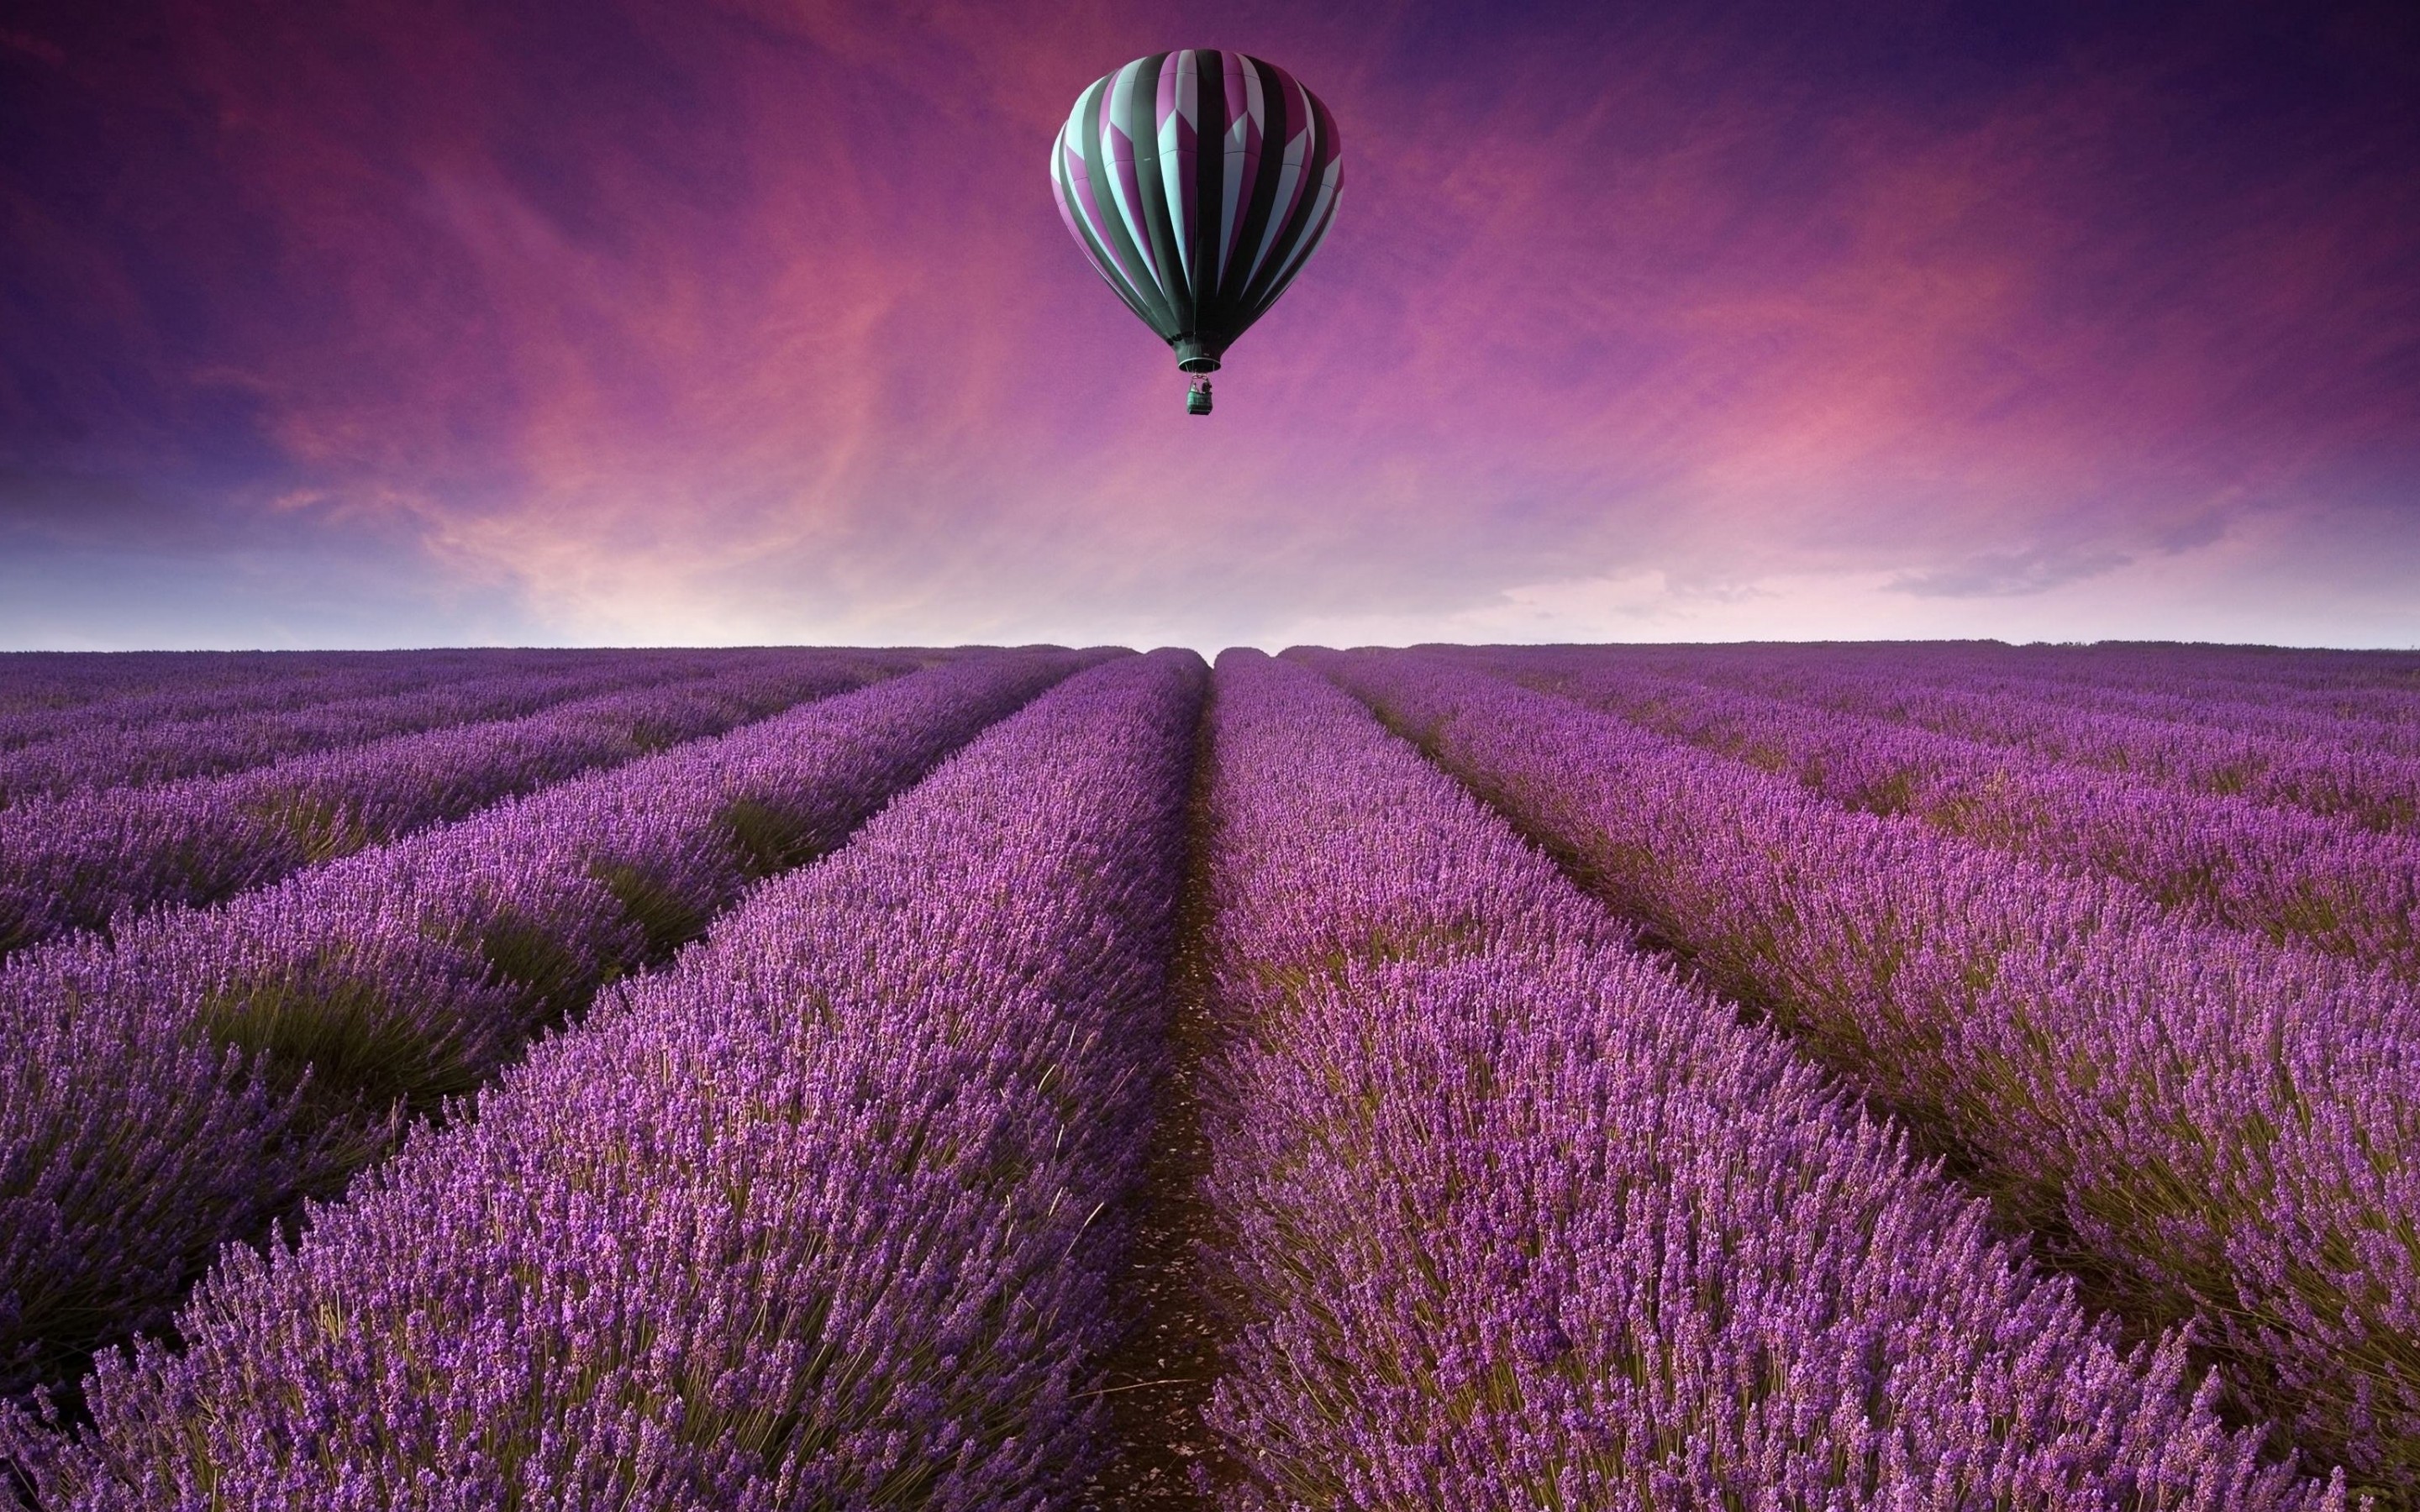 Hot Air Balloon Over Lavender Field Wallpaper for Desktop 2880x1800